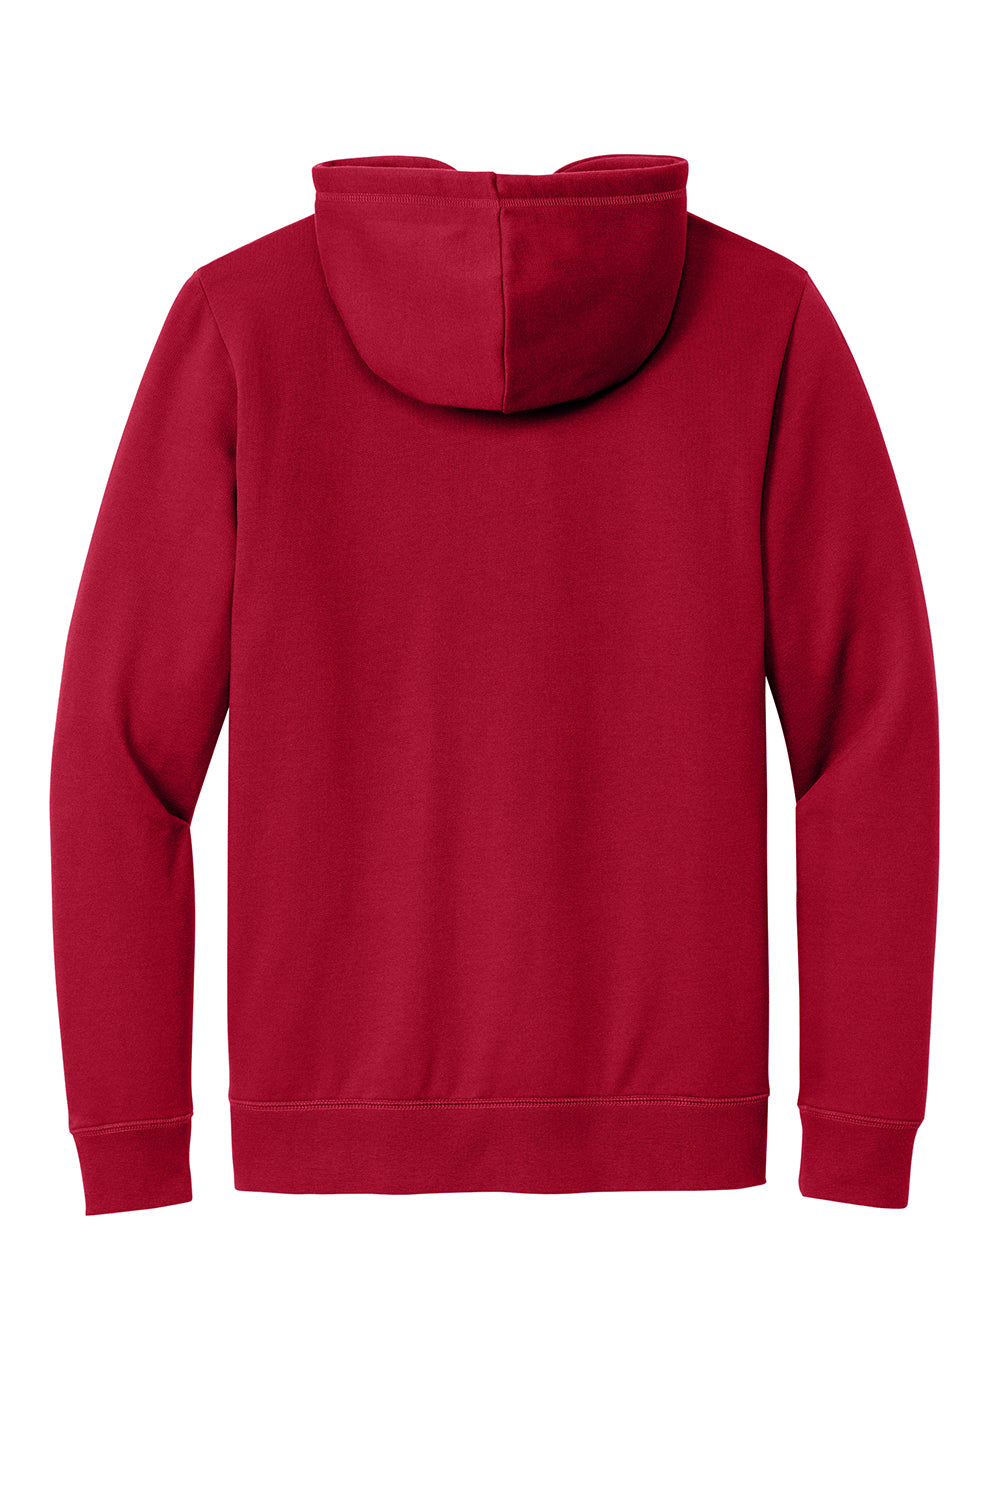 New Era NEA550 Mens Comeback Fleece Hooded Sweatshirt Hoodie Crimson Red Flat Back